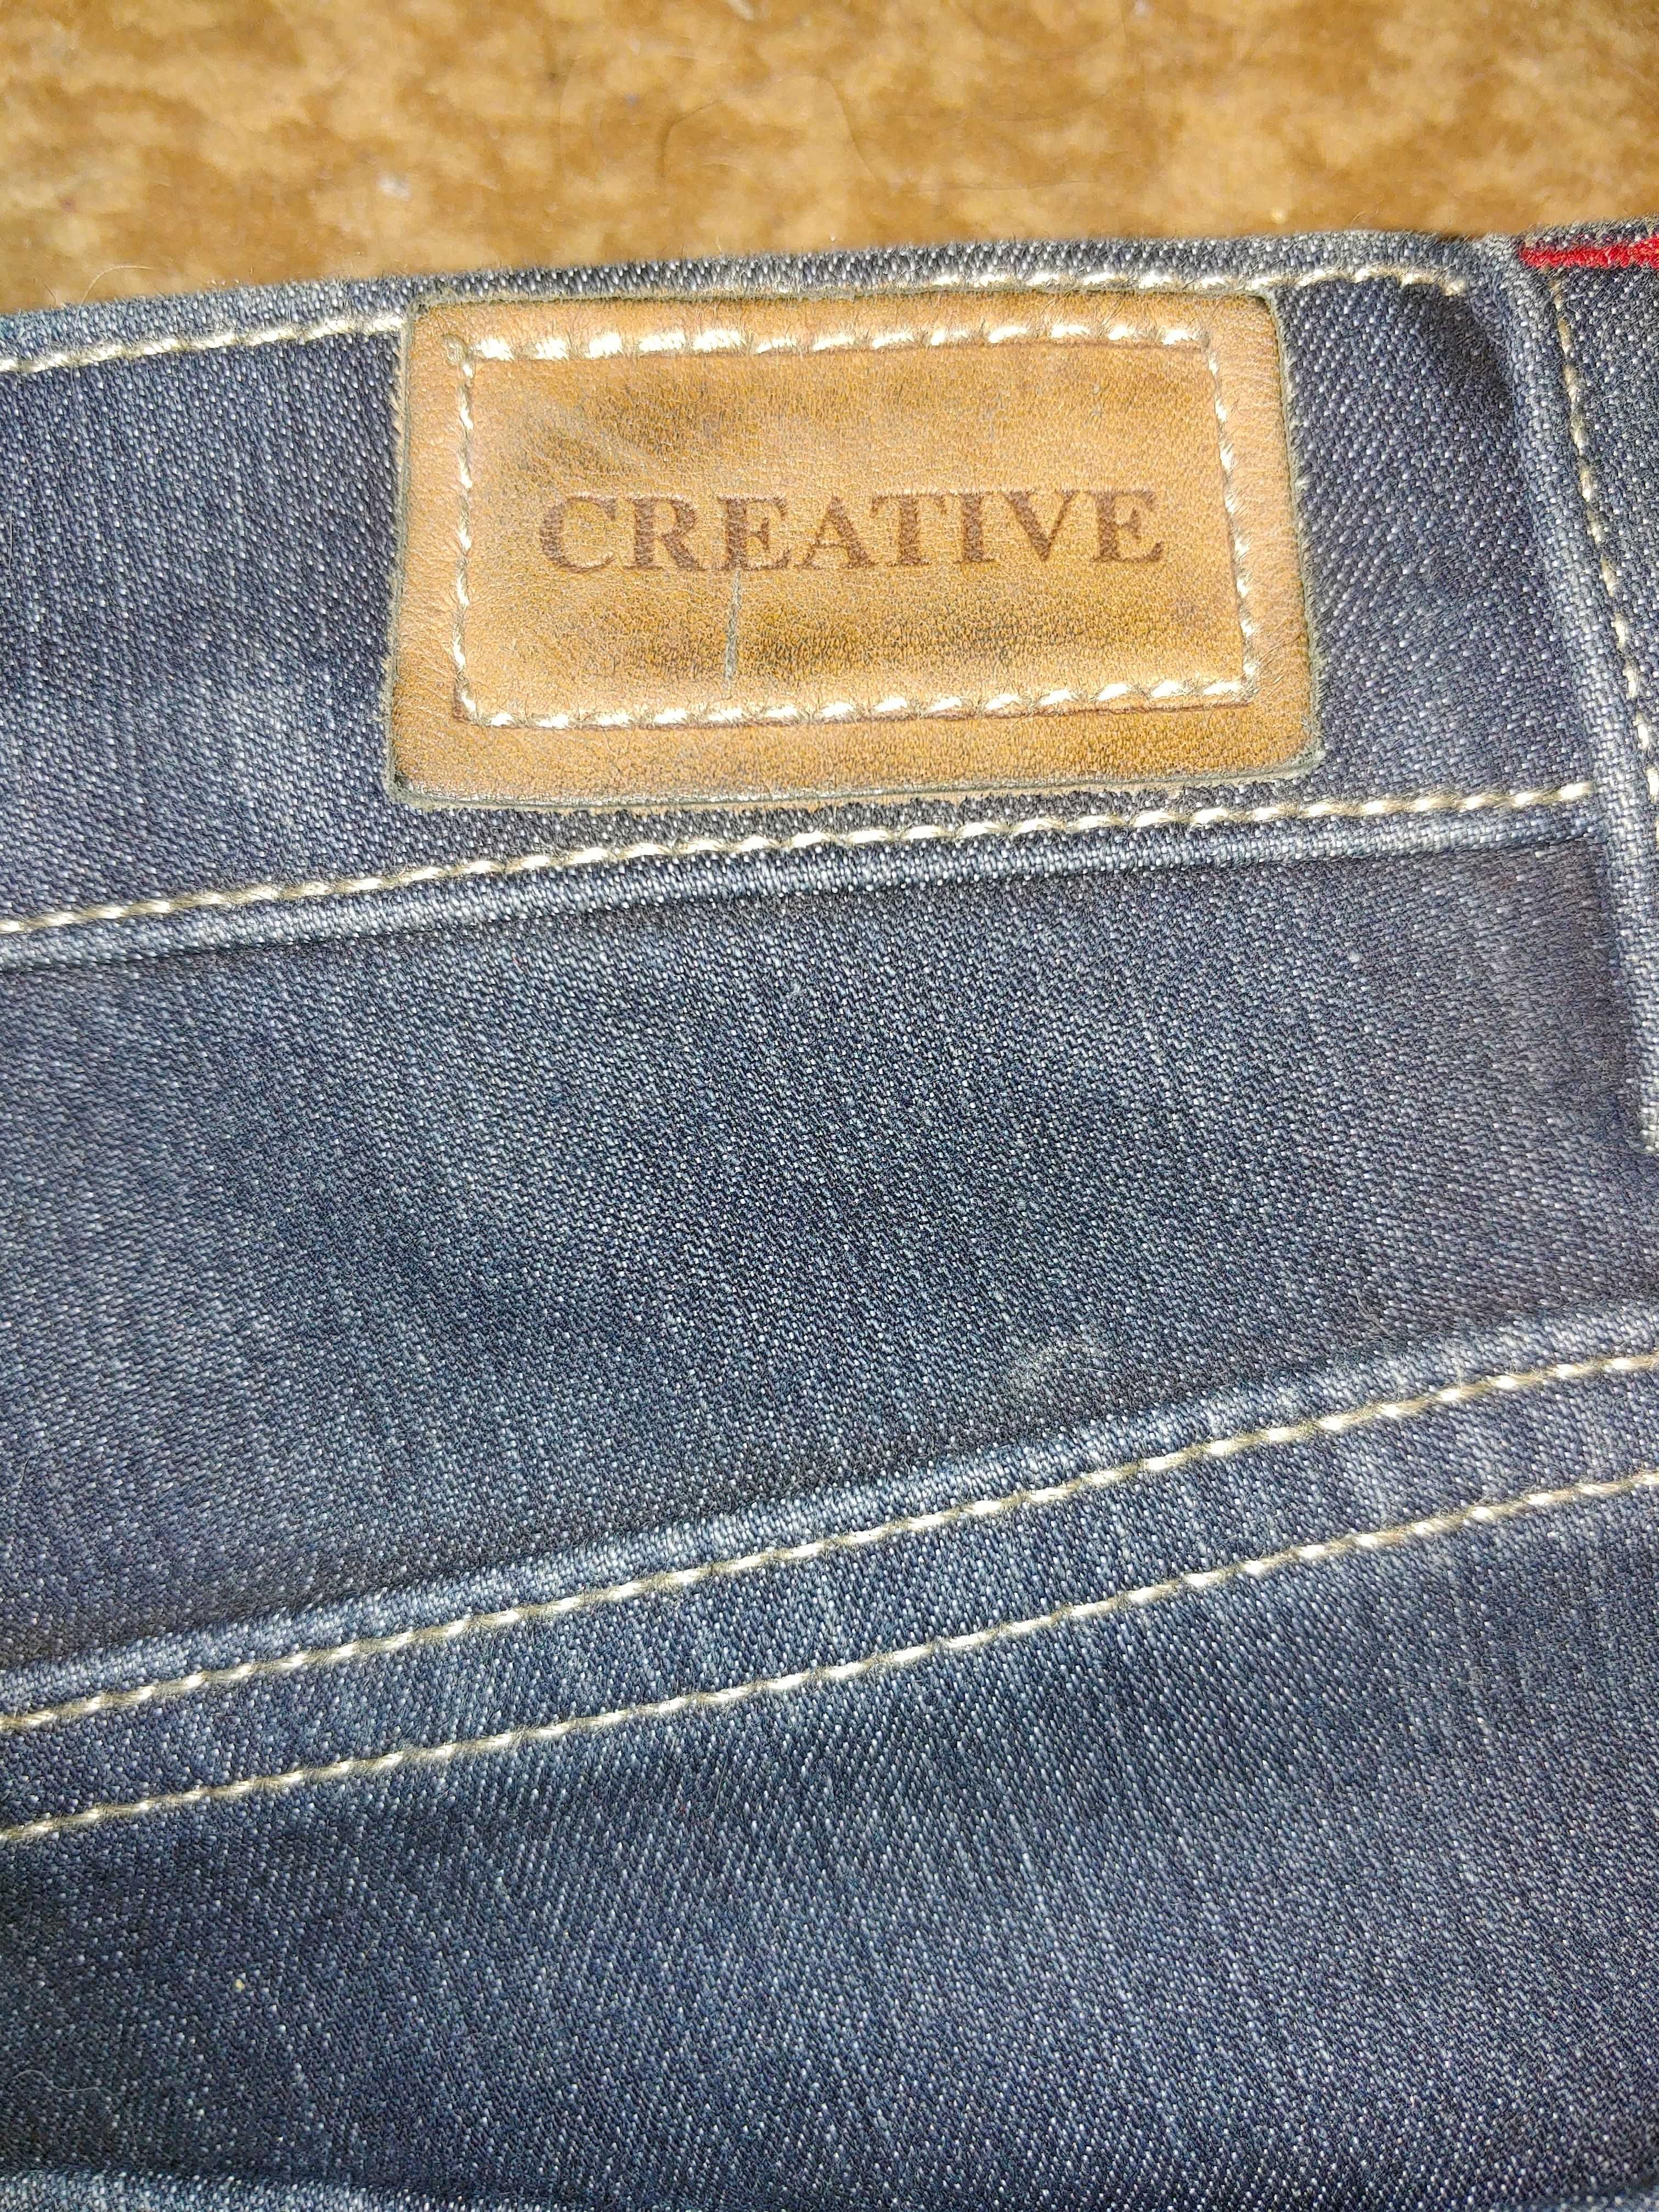 джинсы CREATIVE W35 L34